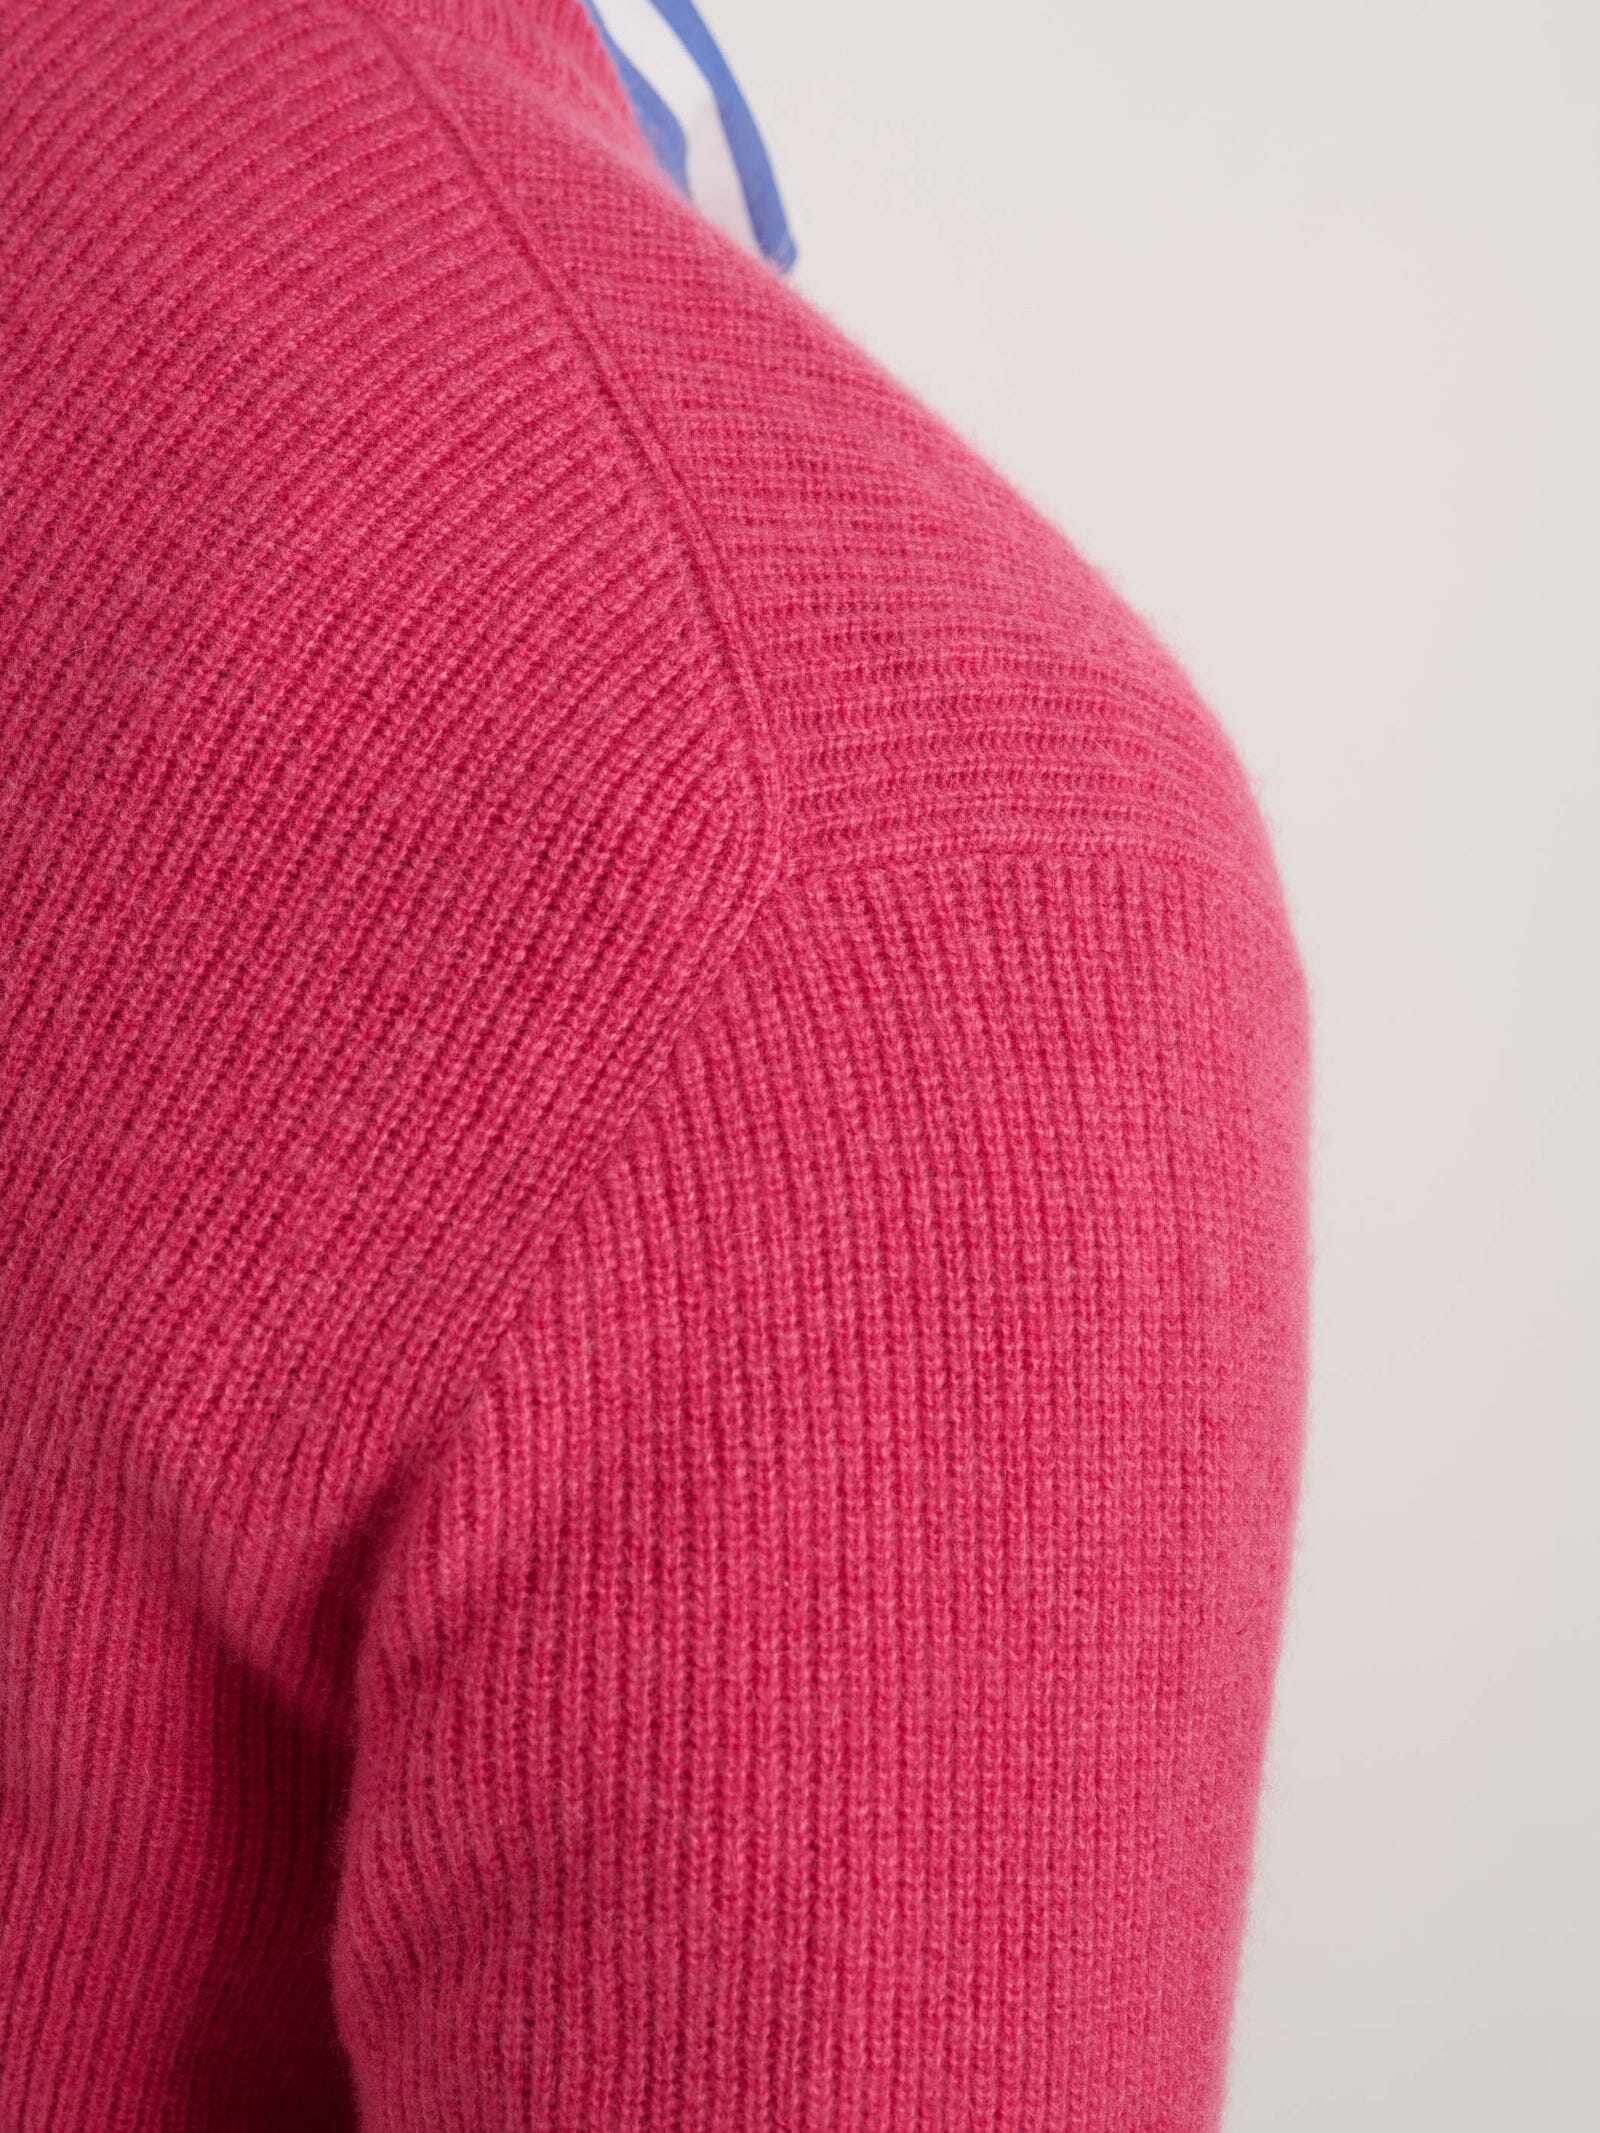 Alex Mill - Jordan Sweater in Lightweight Cashmere in Pink - City Workshop Men's Supply Co.